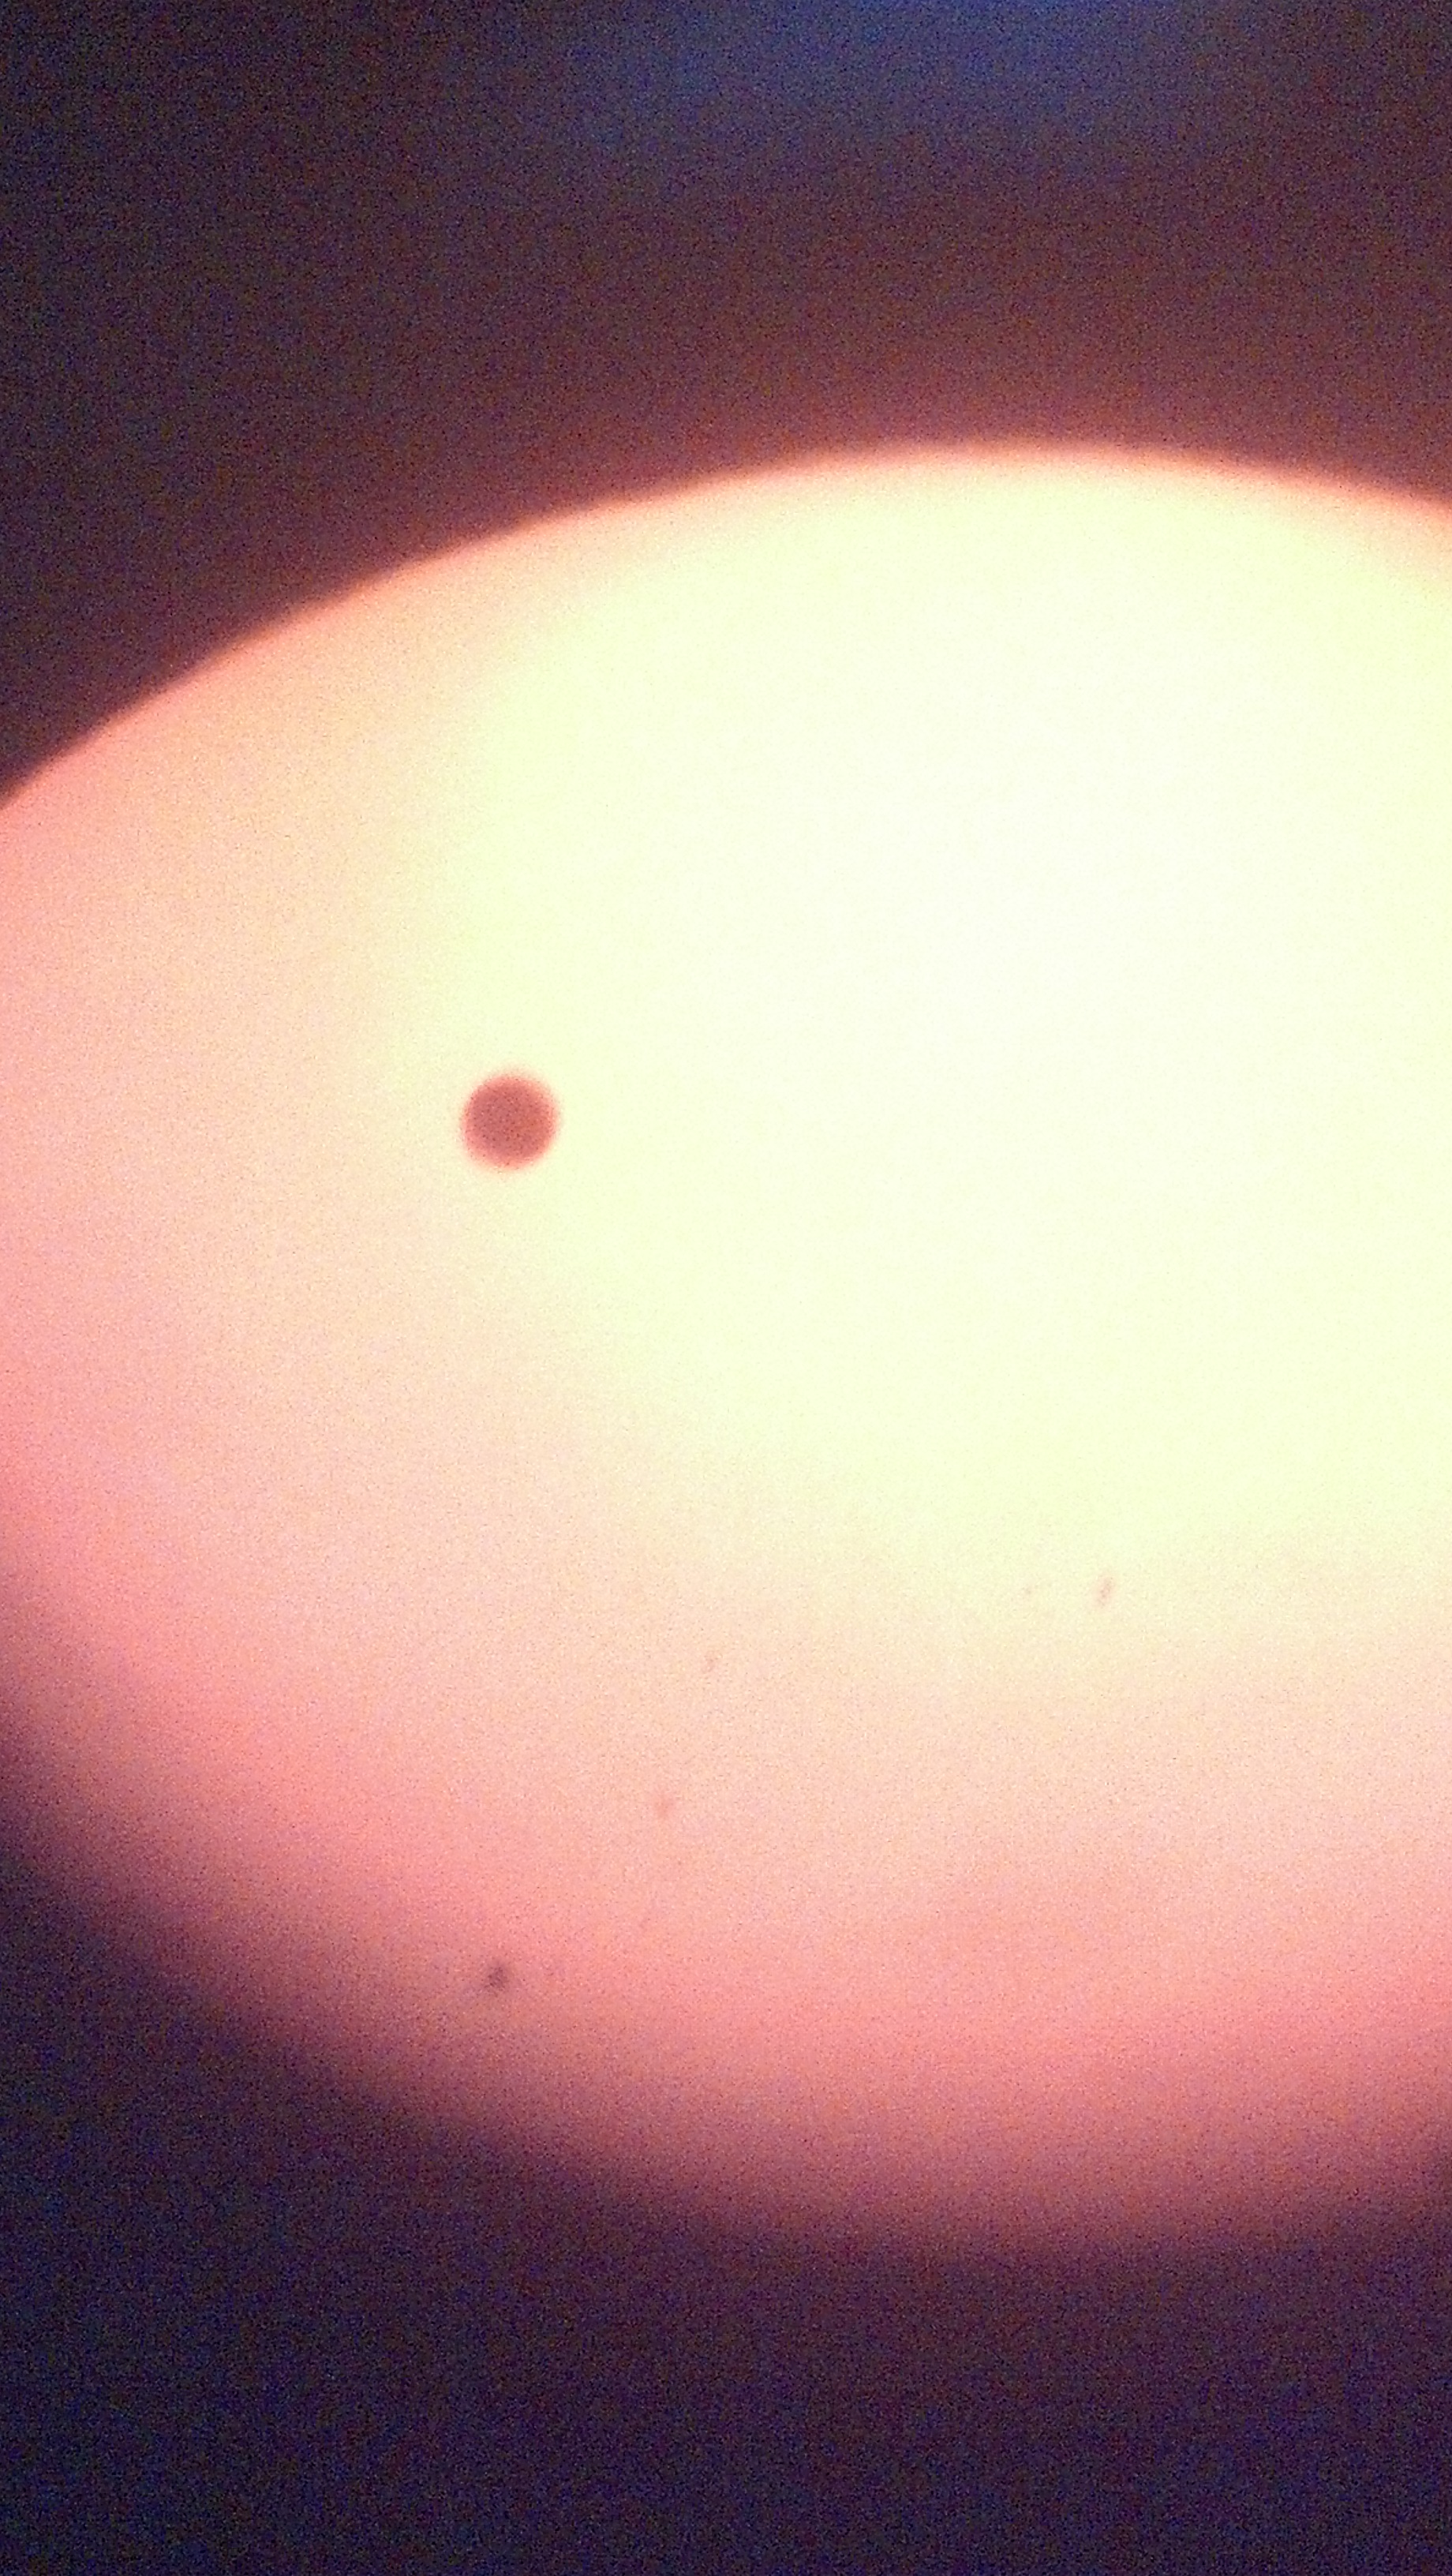 Droid: Venus transit 5:15pm 6/5/2012